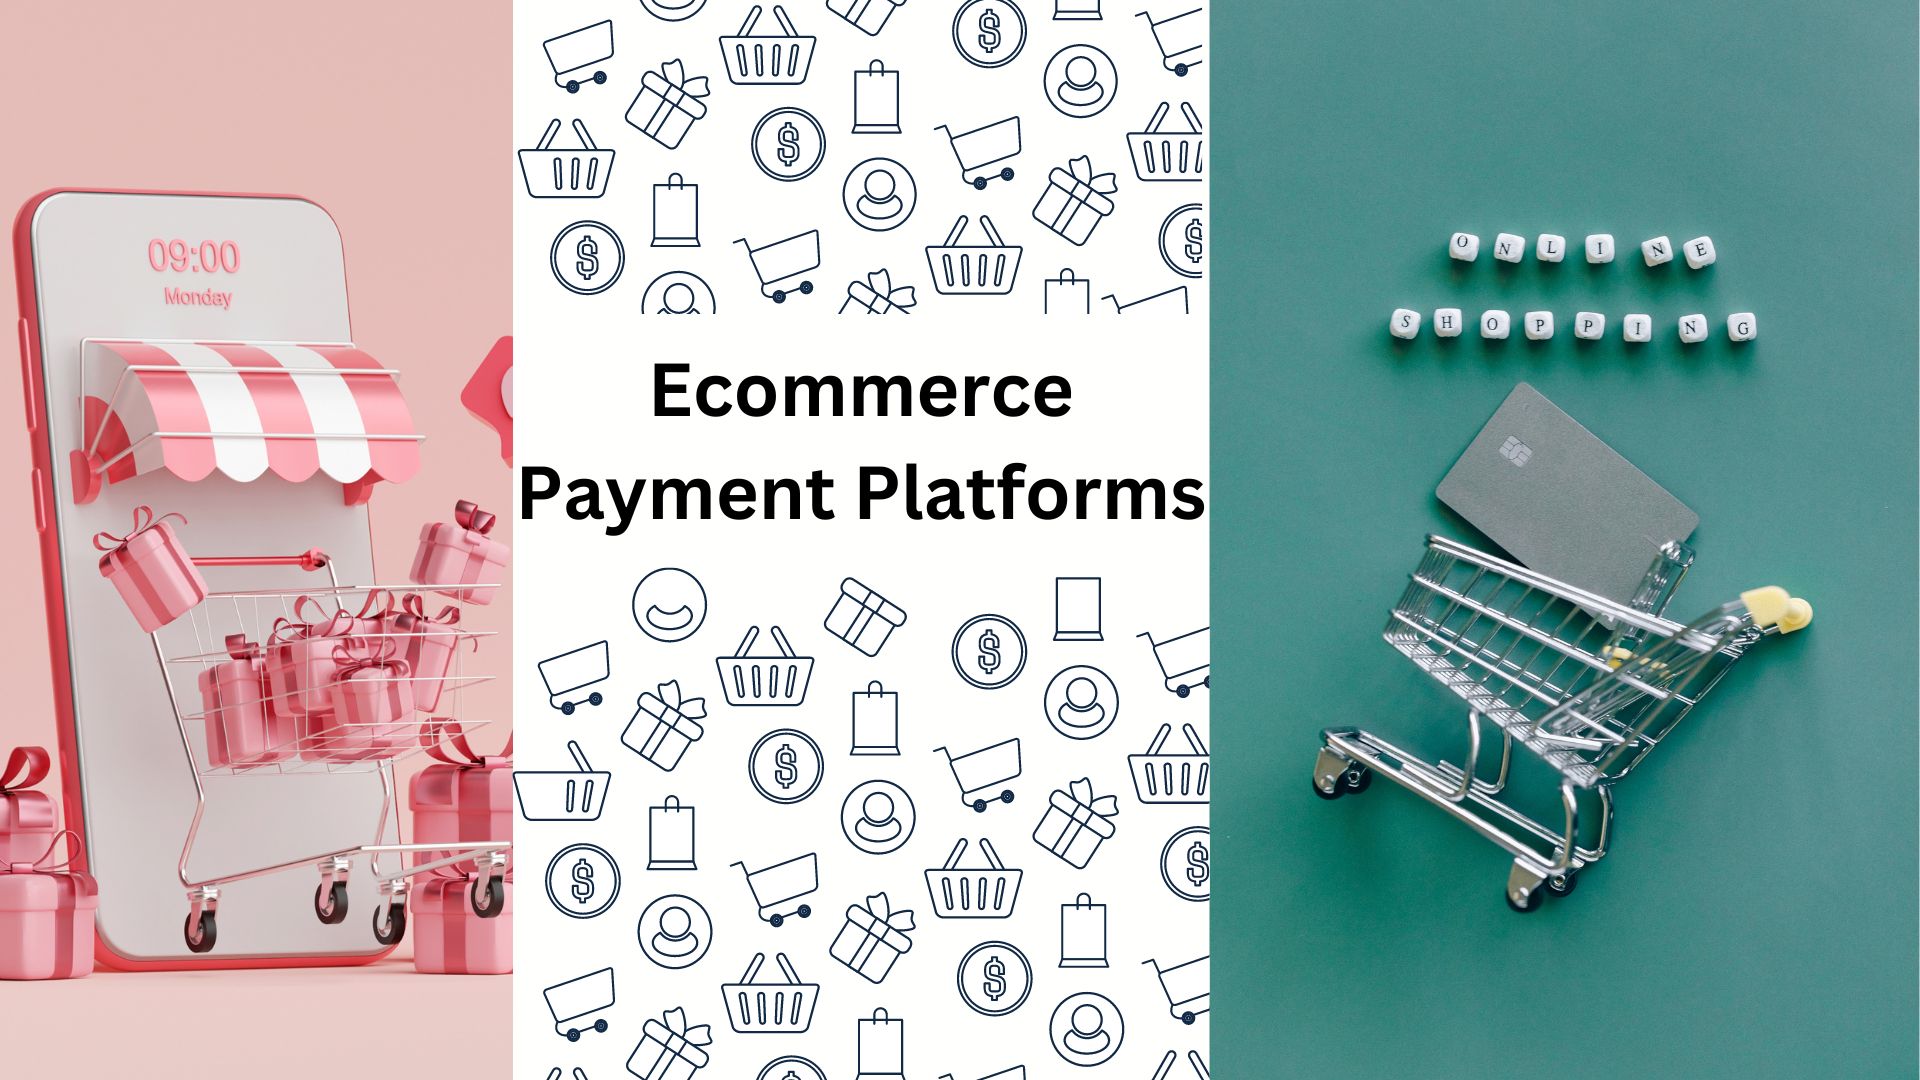 Ecommerce Payment Platforms